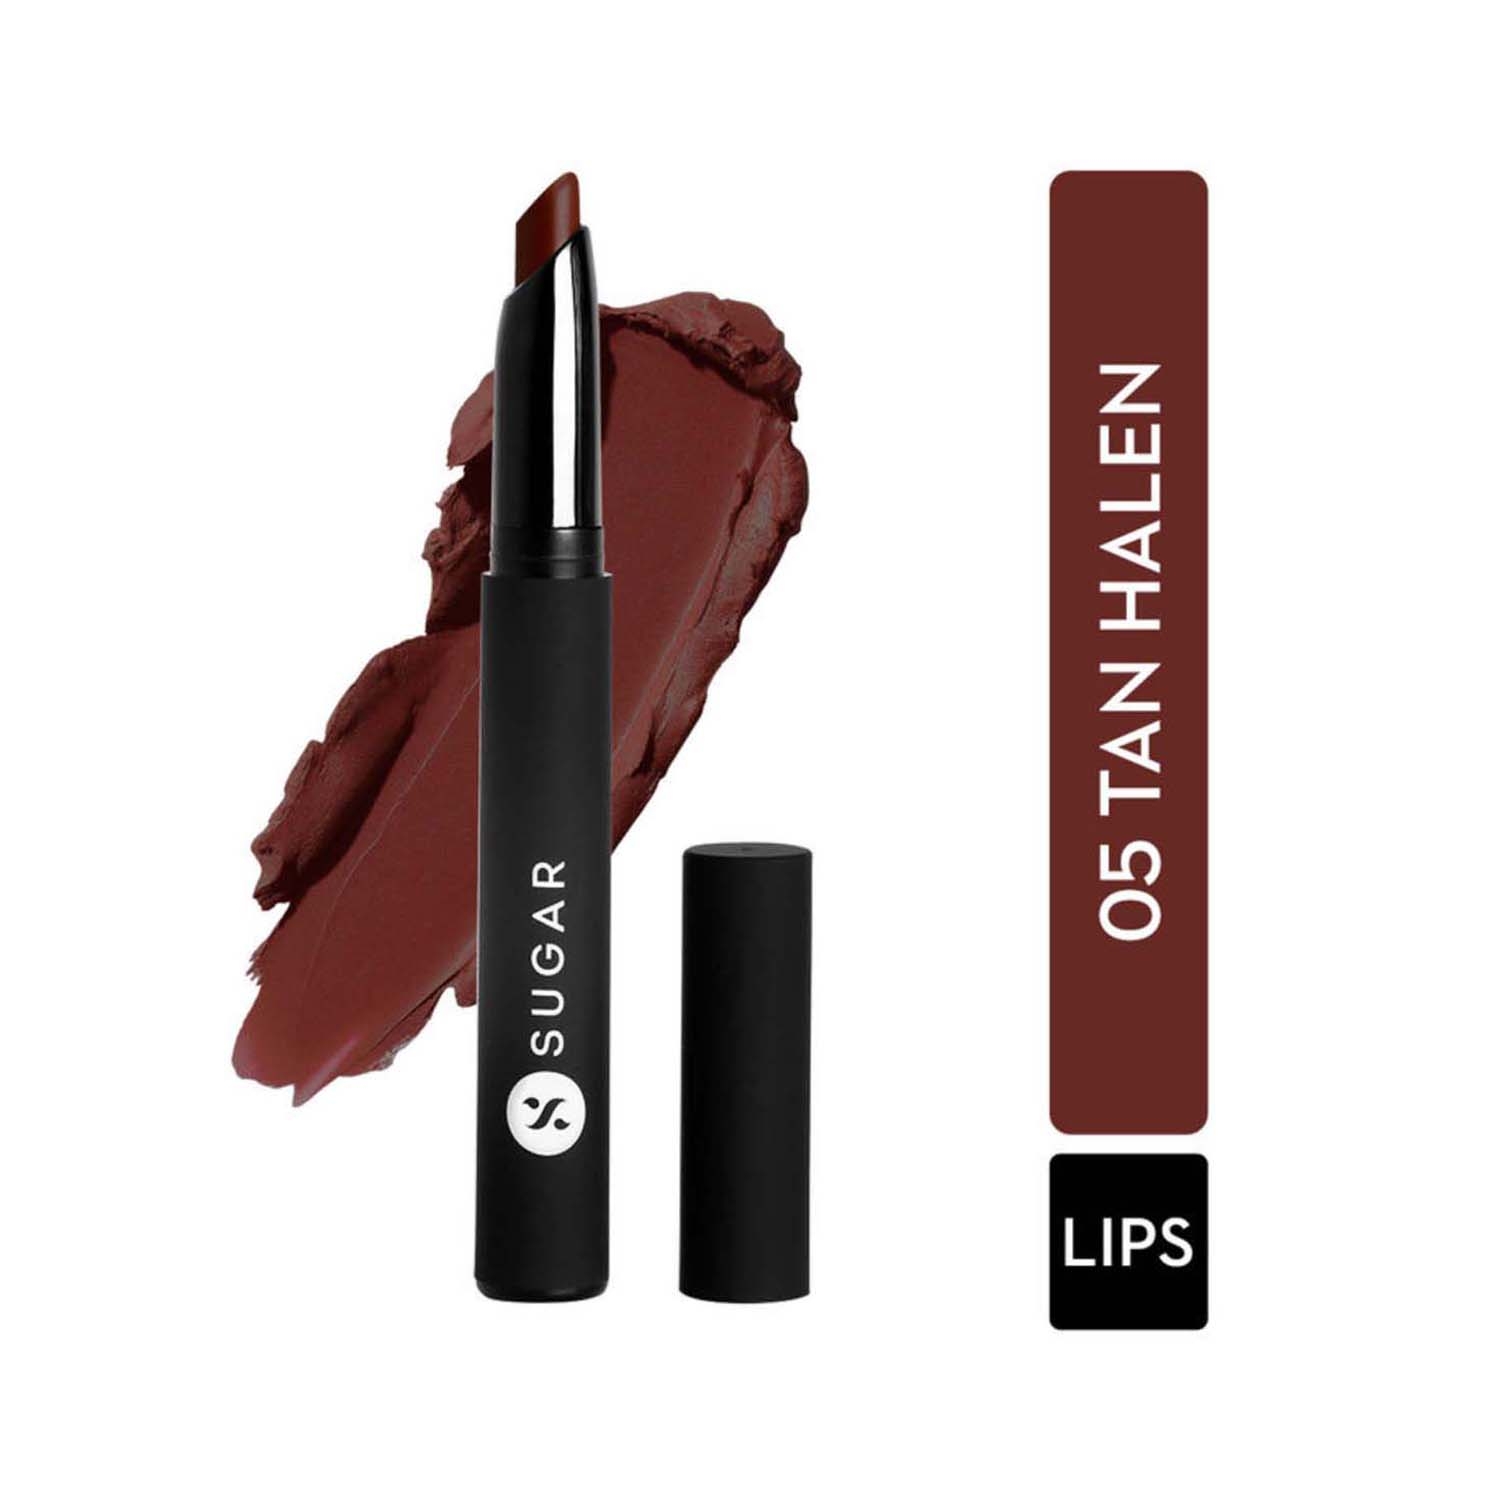 SUGAR Cosmetics | SUGAR Cosmetics Matte Attack Transferproof Lipstick - 05 Tan Halen (Chocolate Brown) (2g)